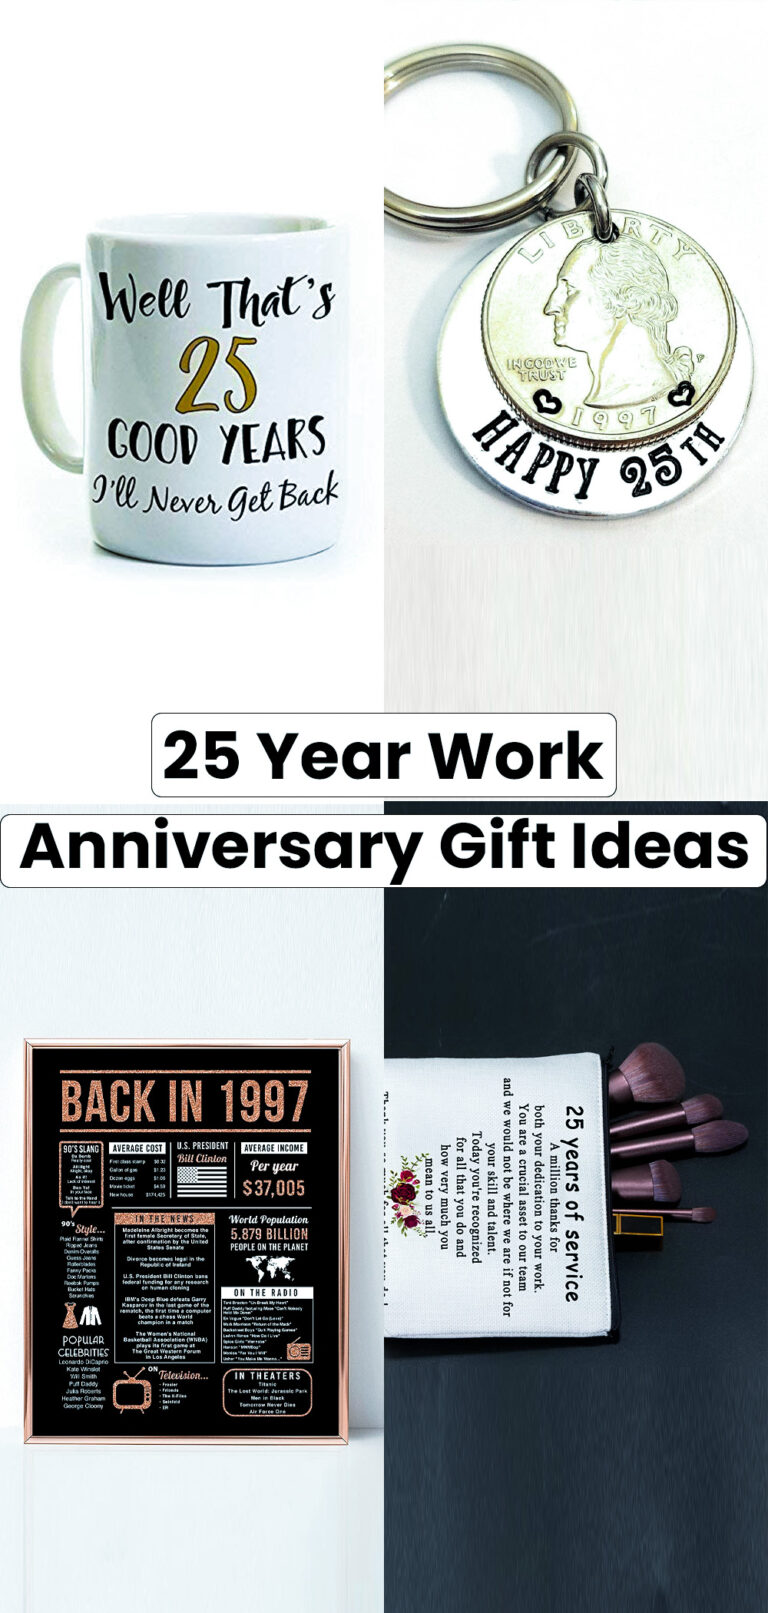 25 Year Work Anniversary Gift Ideas